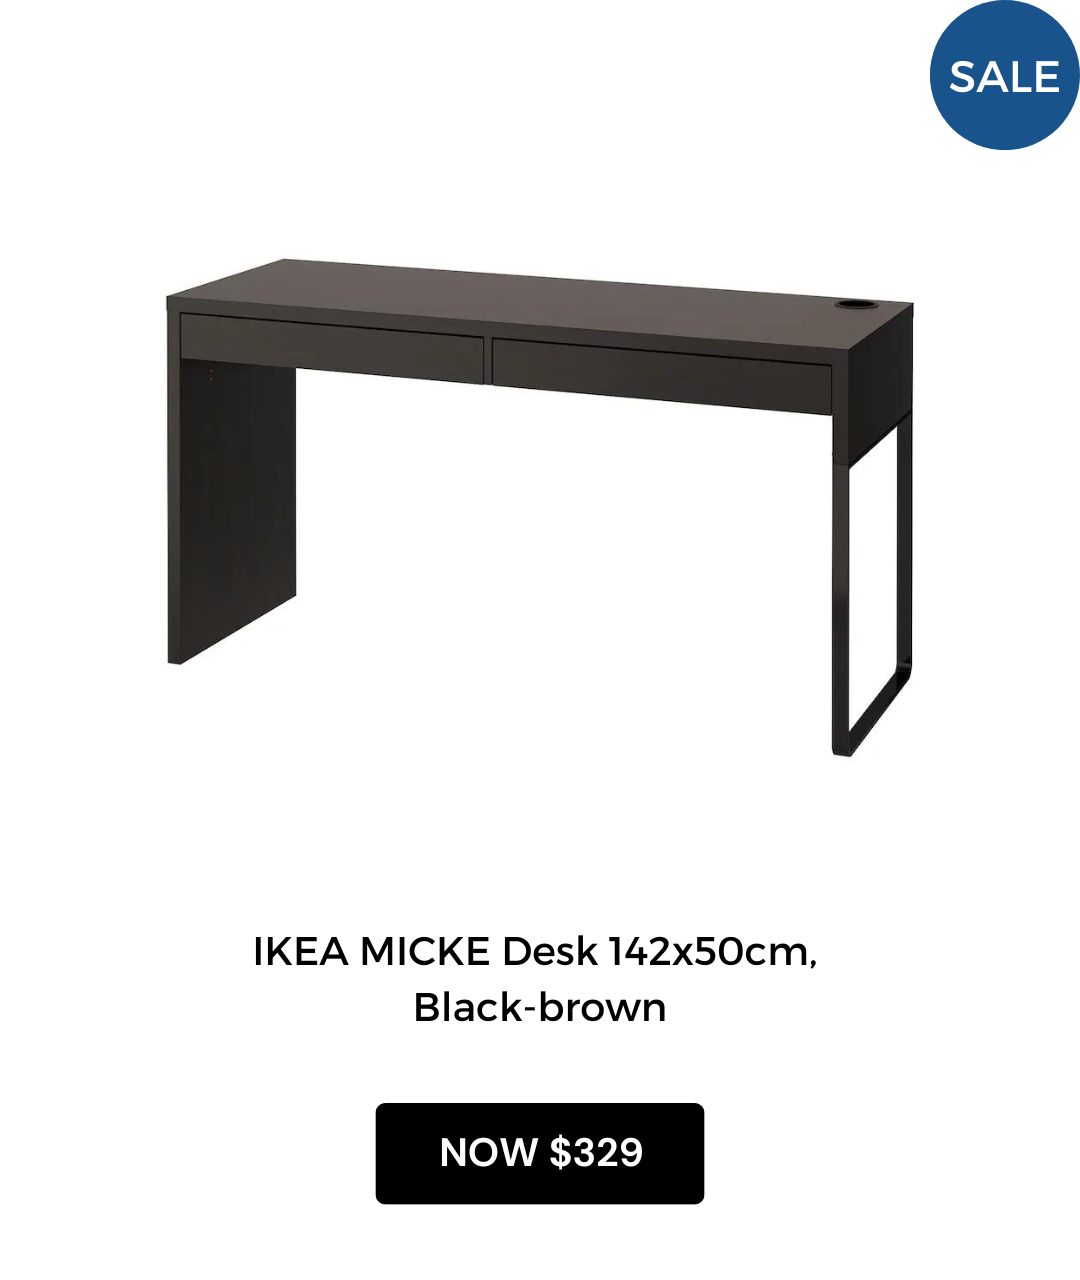 IKEA MICKE Desk 142x50cm, Black-brown